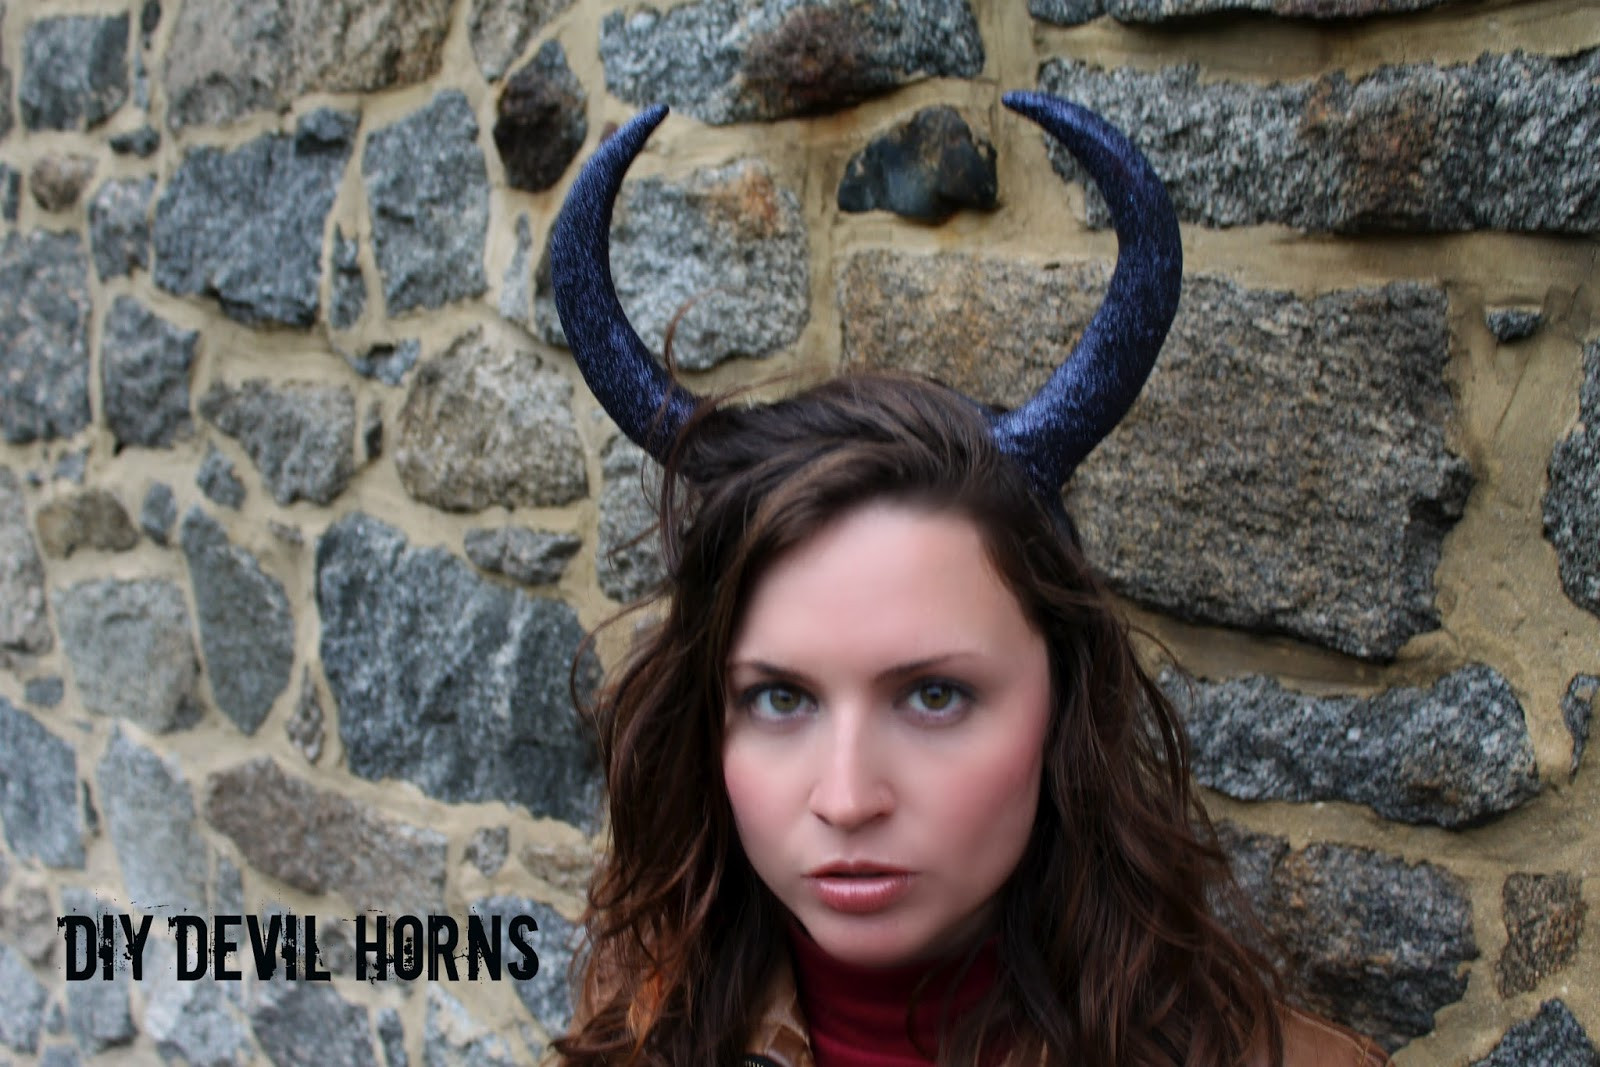 Best ideas about DIY Devil Horns
. Save or Pin Madame Heather DIY Devil Horns Now.